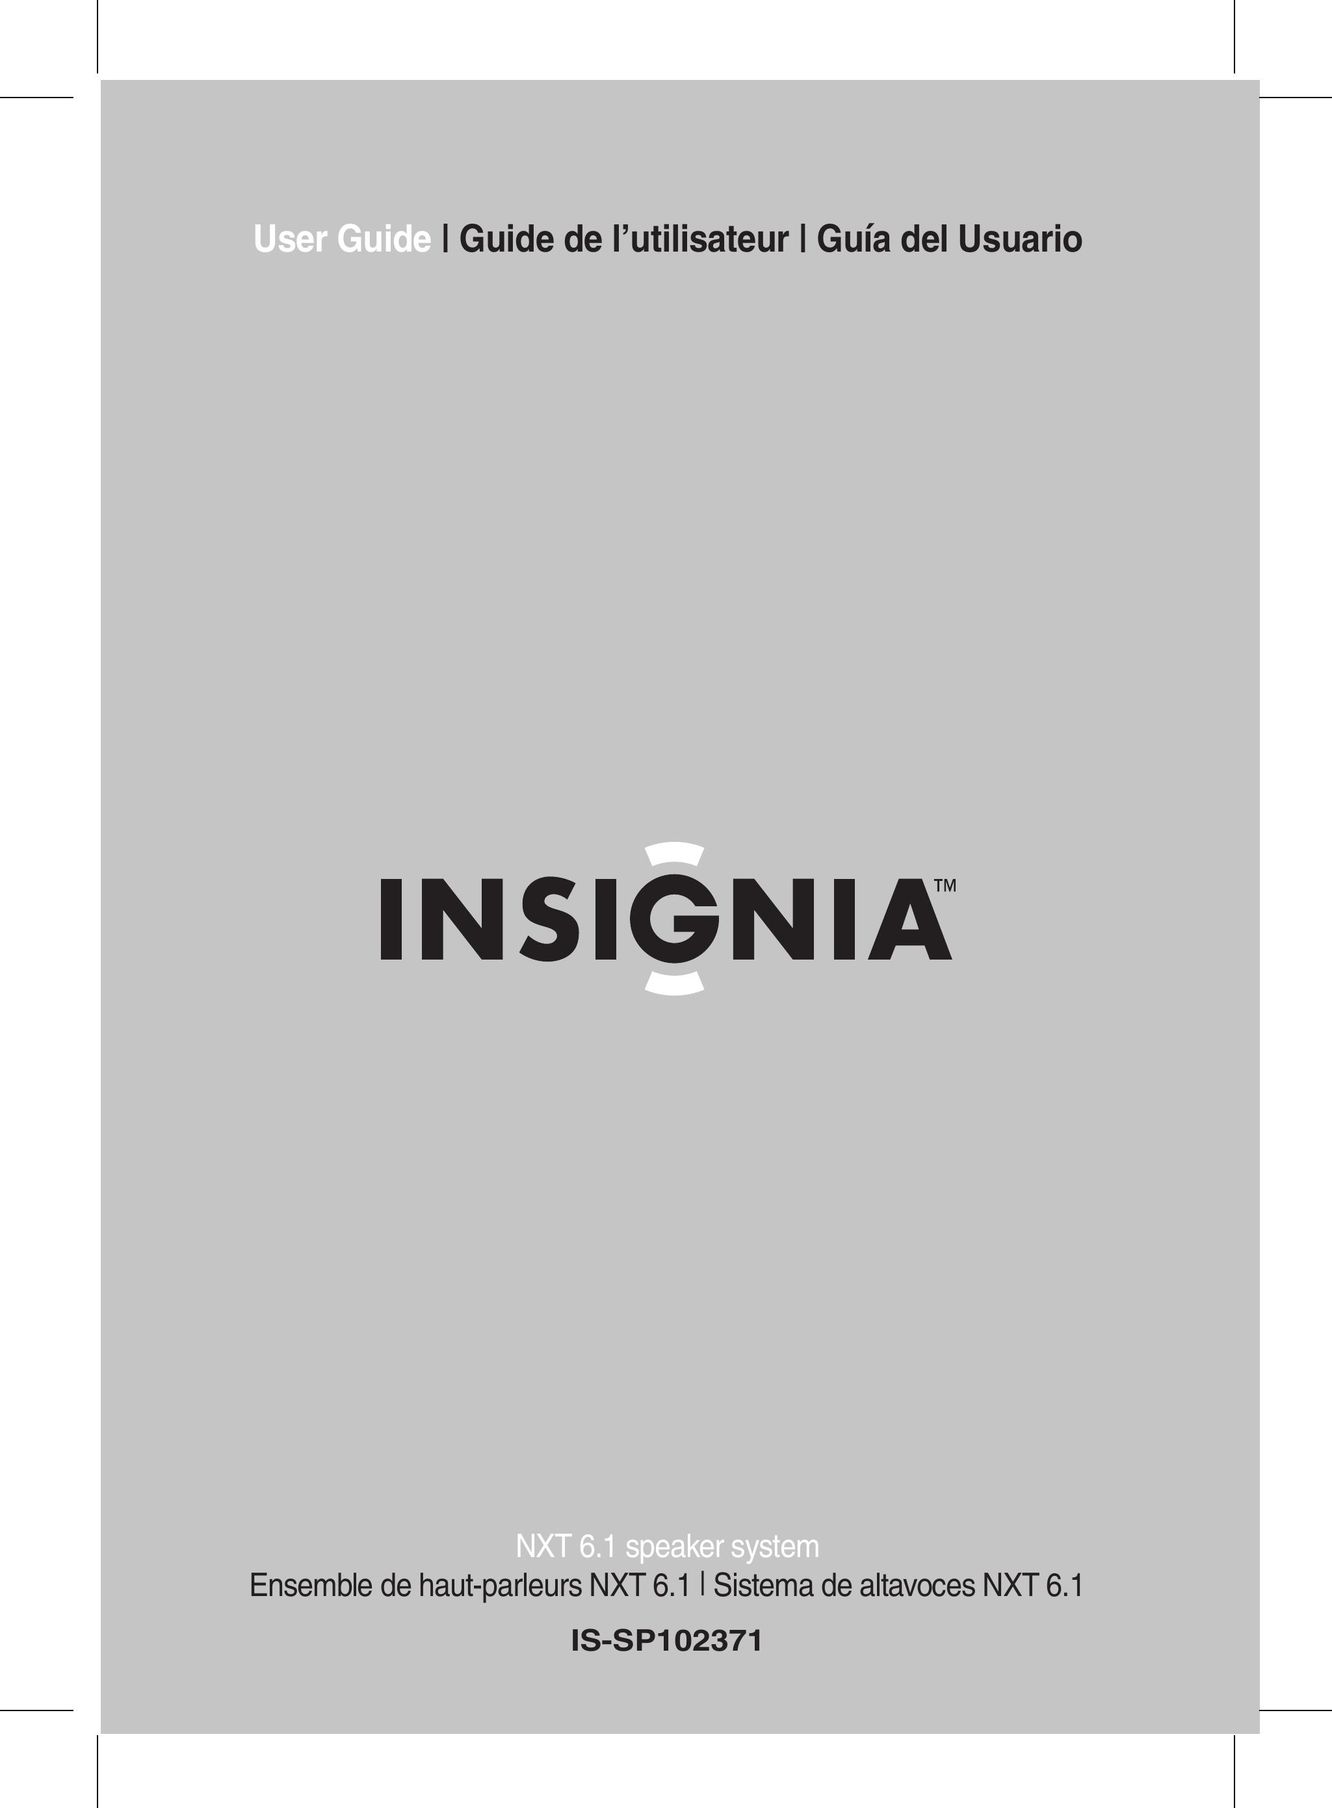 Insignia IS-SP102371 Speaker System User Manual